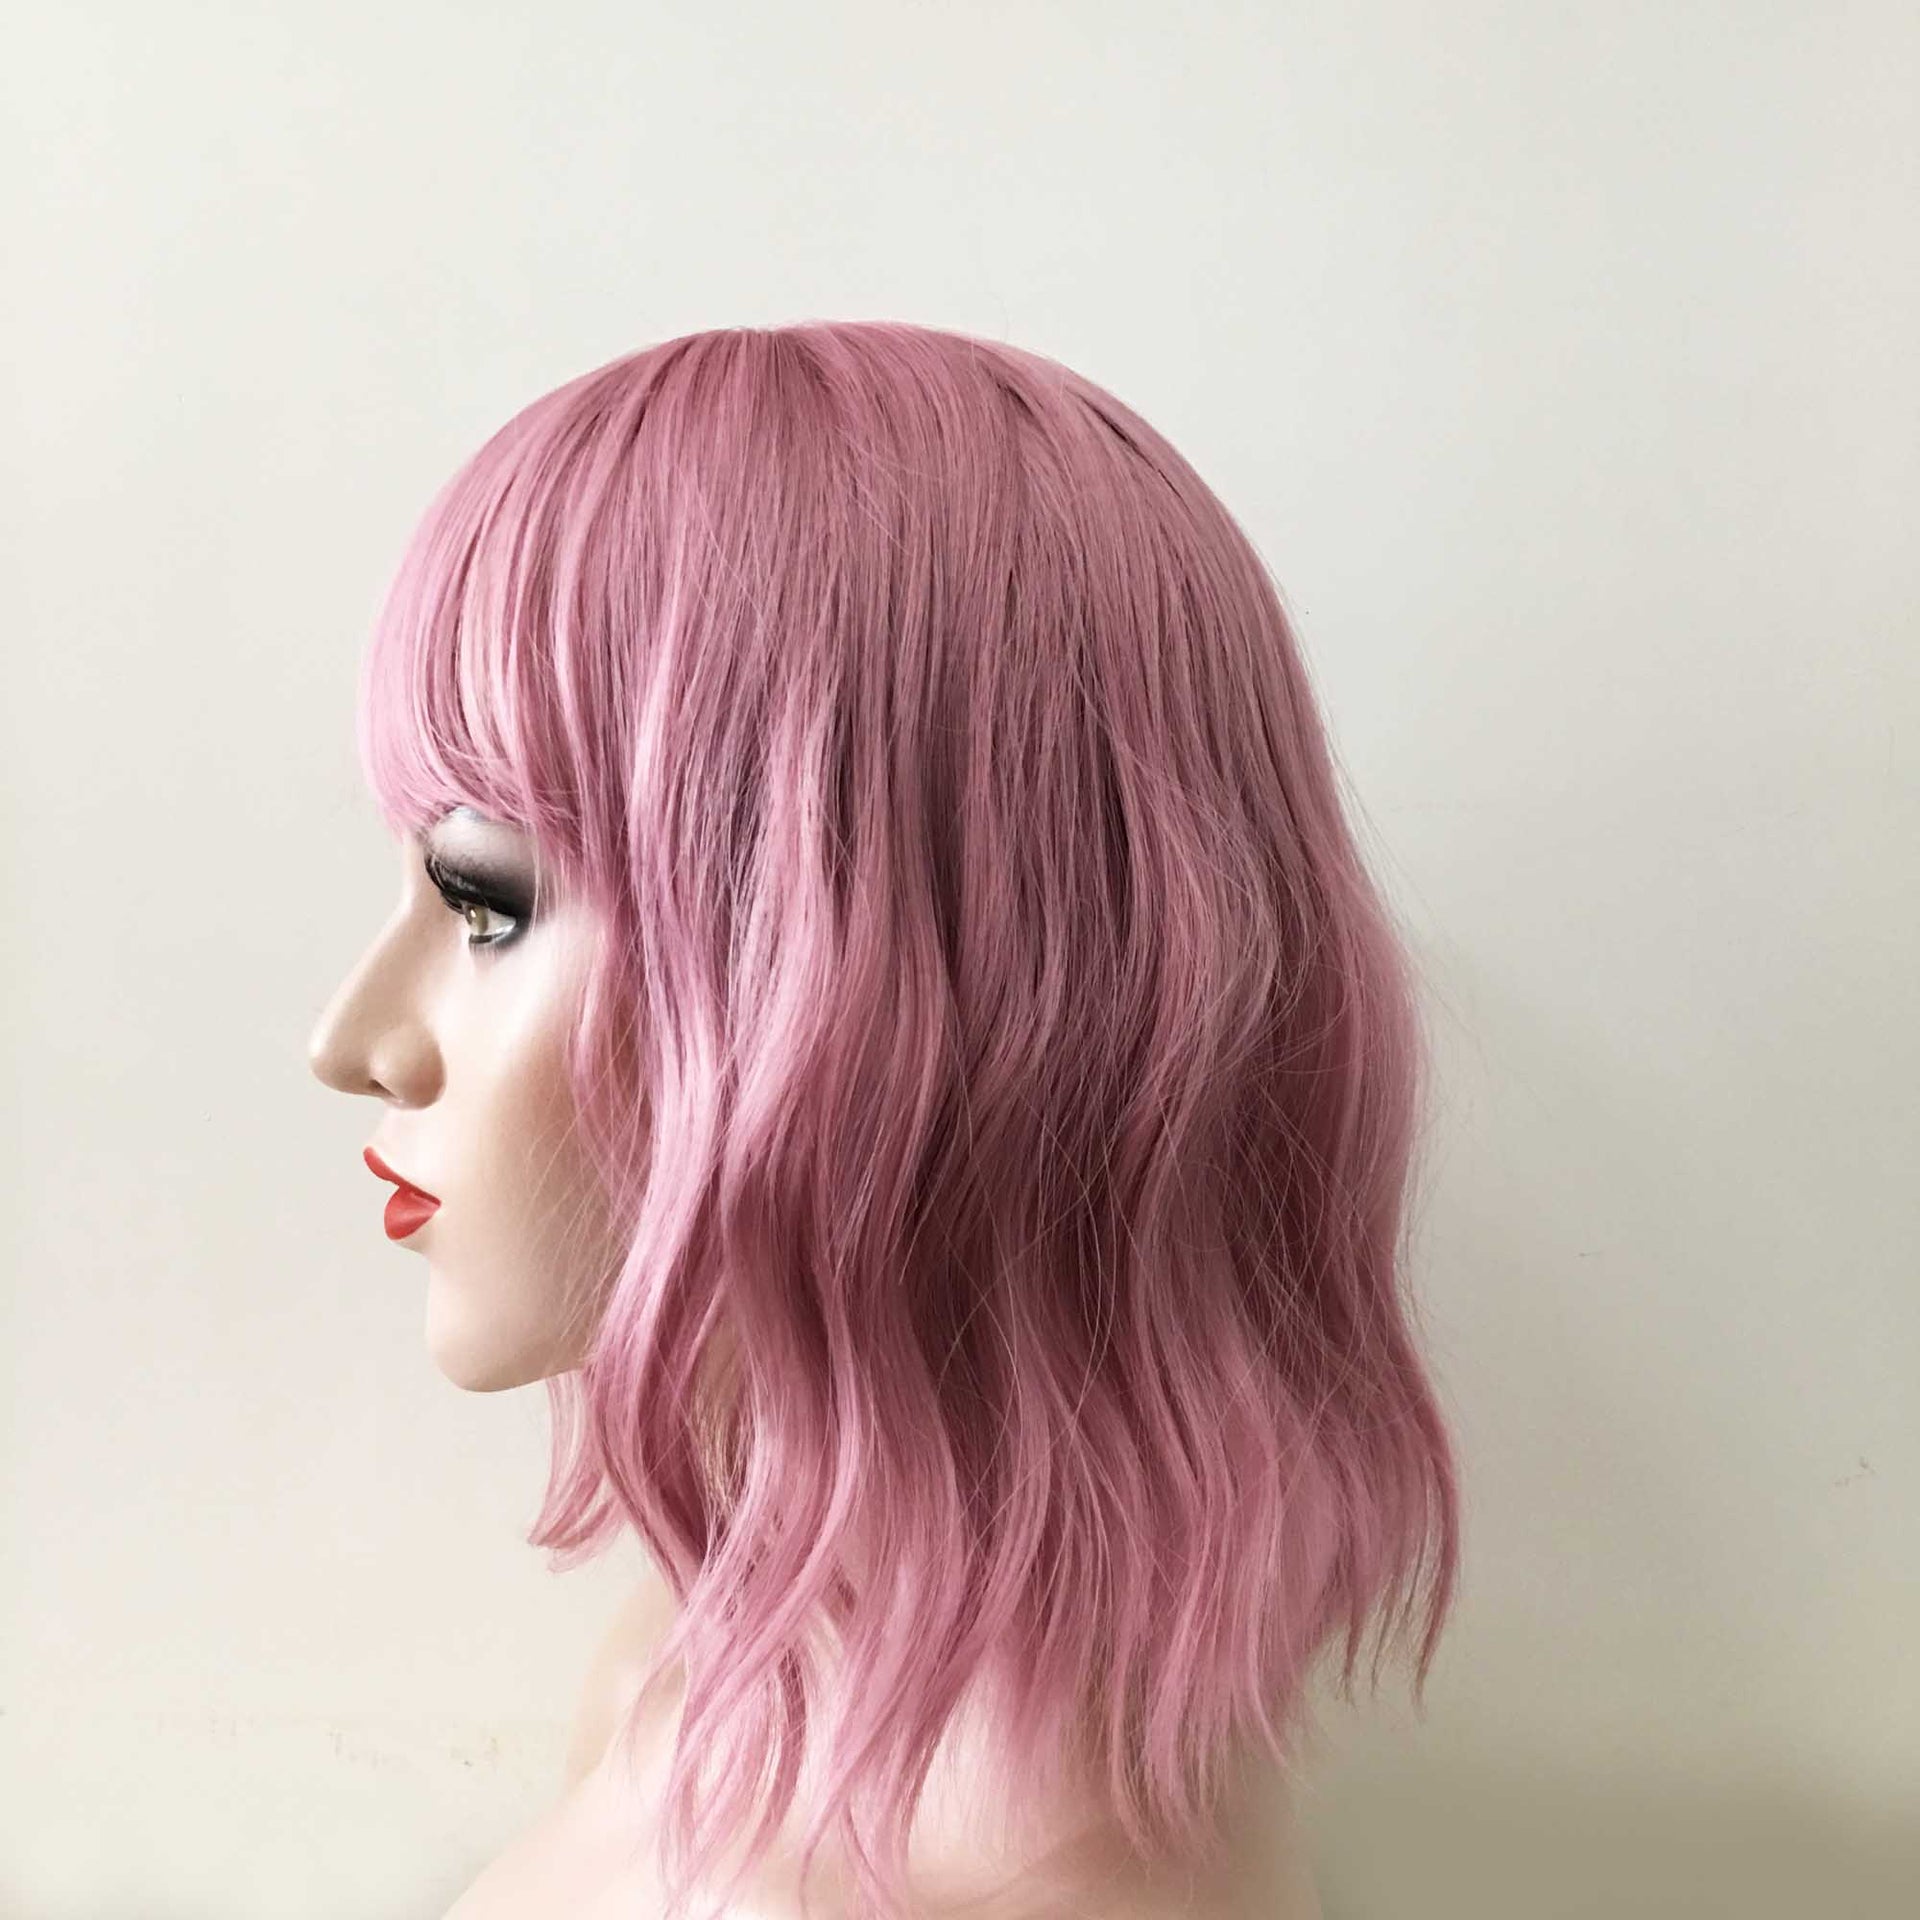 nevermindyrhead Women Pink Short Wavy Bob Fringe Bangs Wig